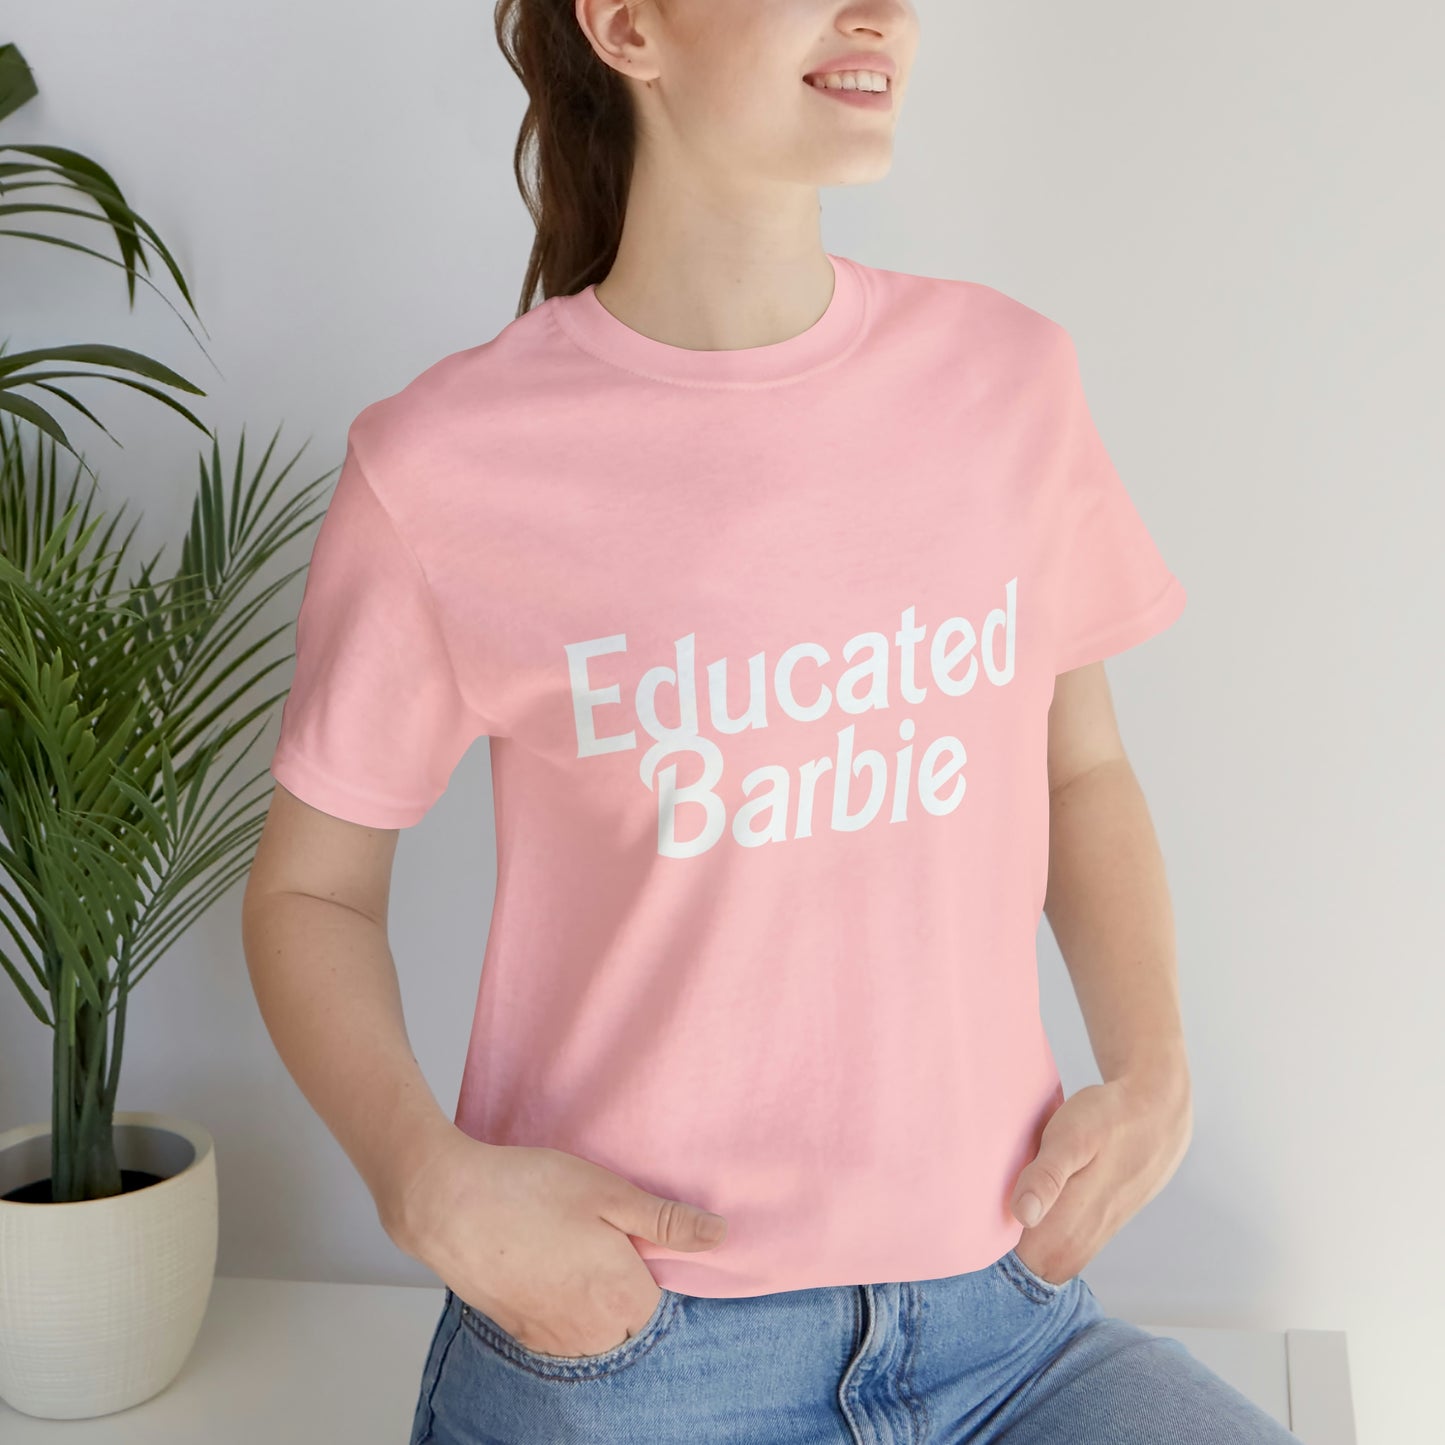 Educated Barbie